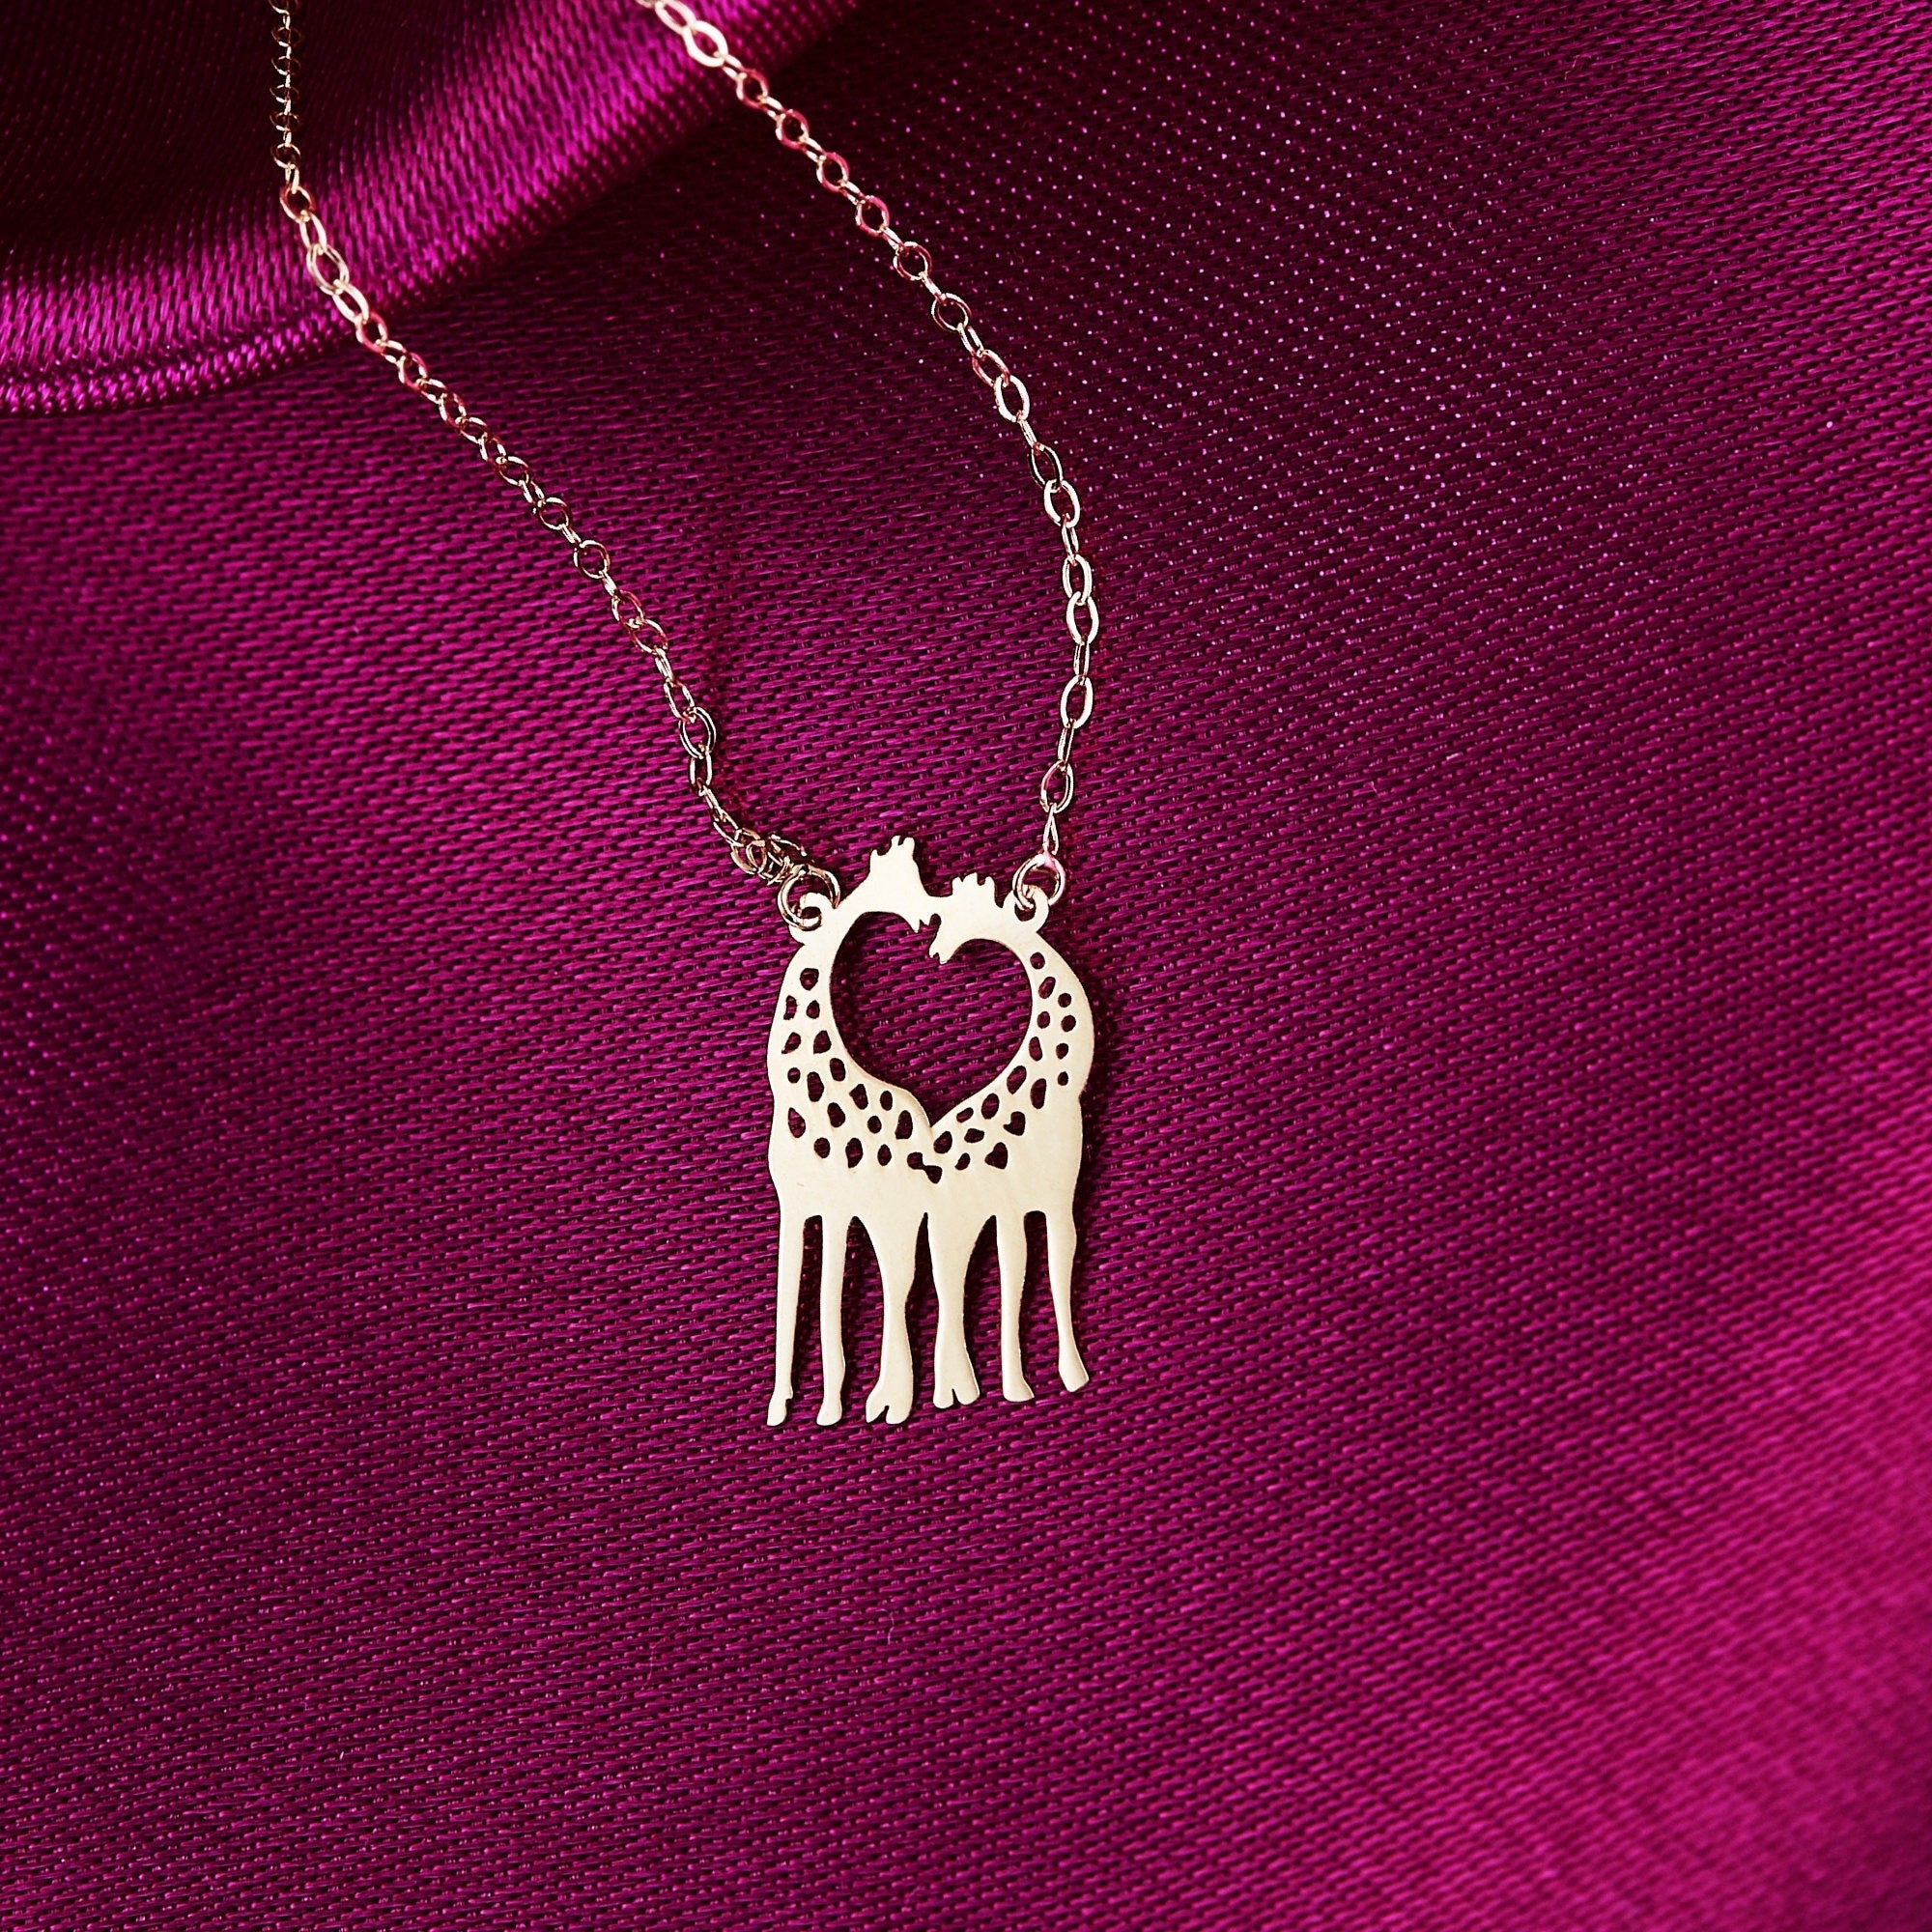 14 Carat Gold Giraffe Valentine Necklace - zrfkol105